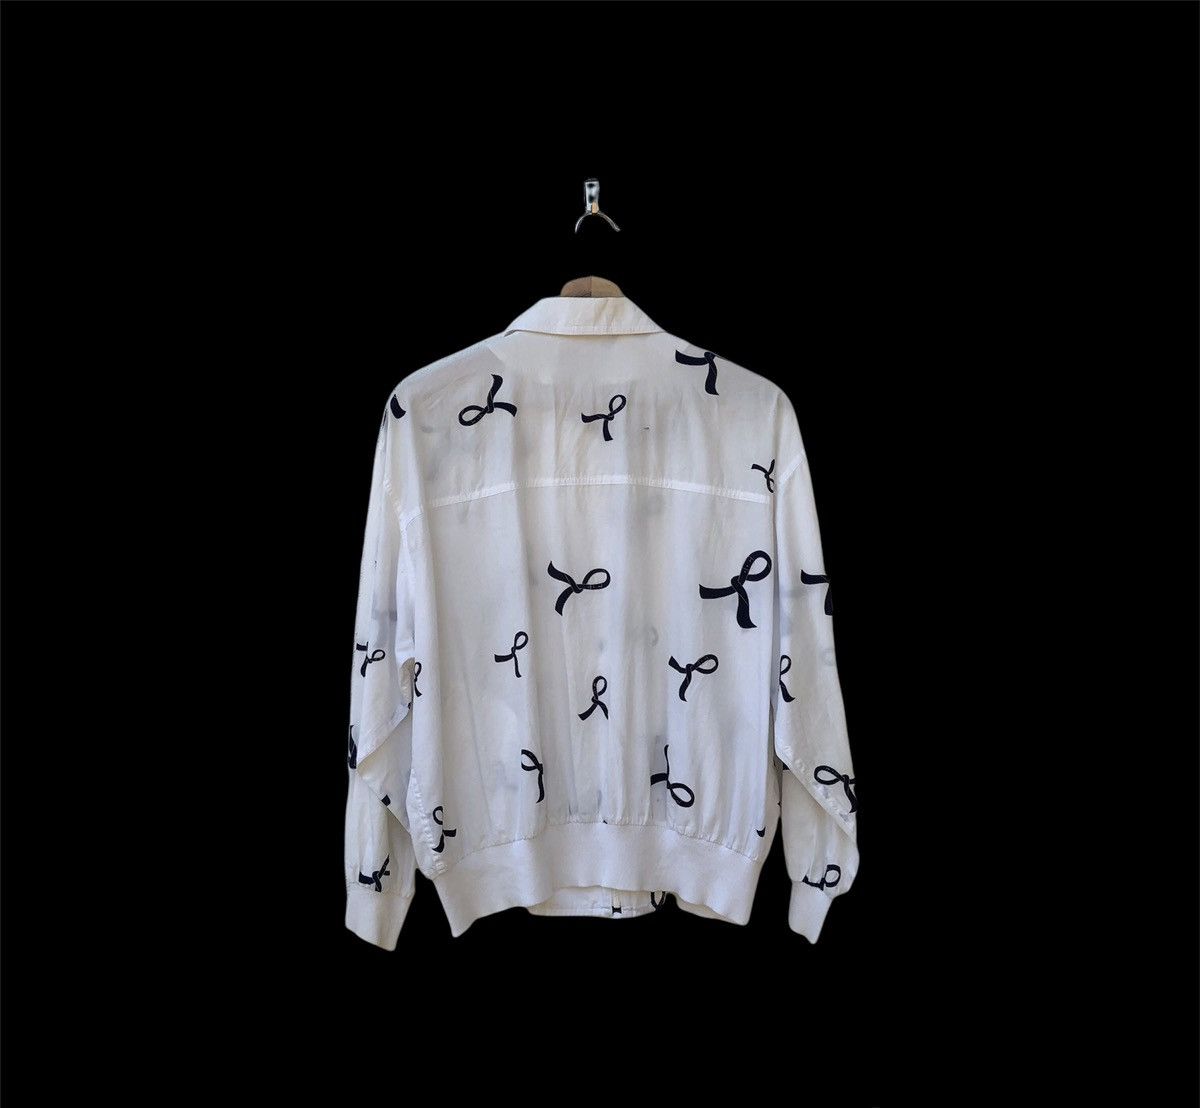 Japanese Brand - 🧨OFFER Roberta di camerino peace print jacket - 2